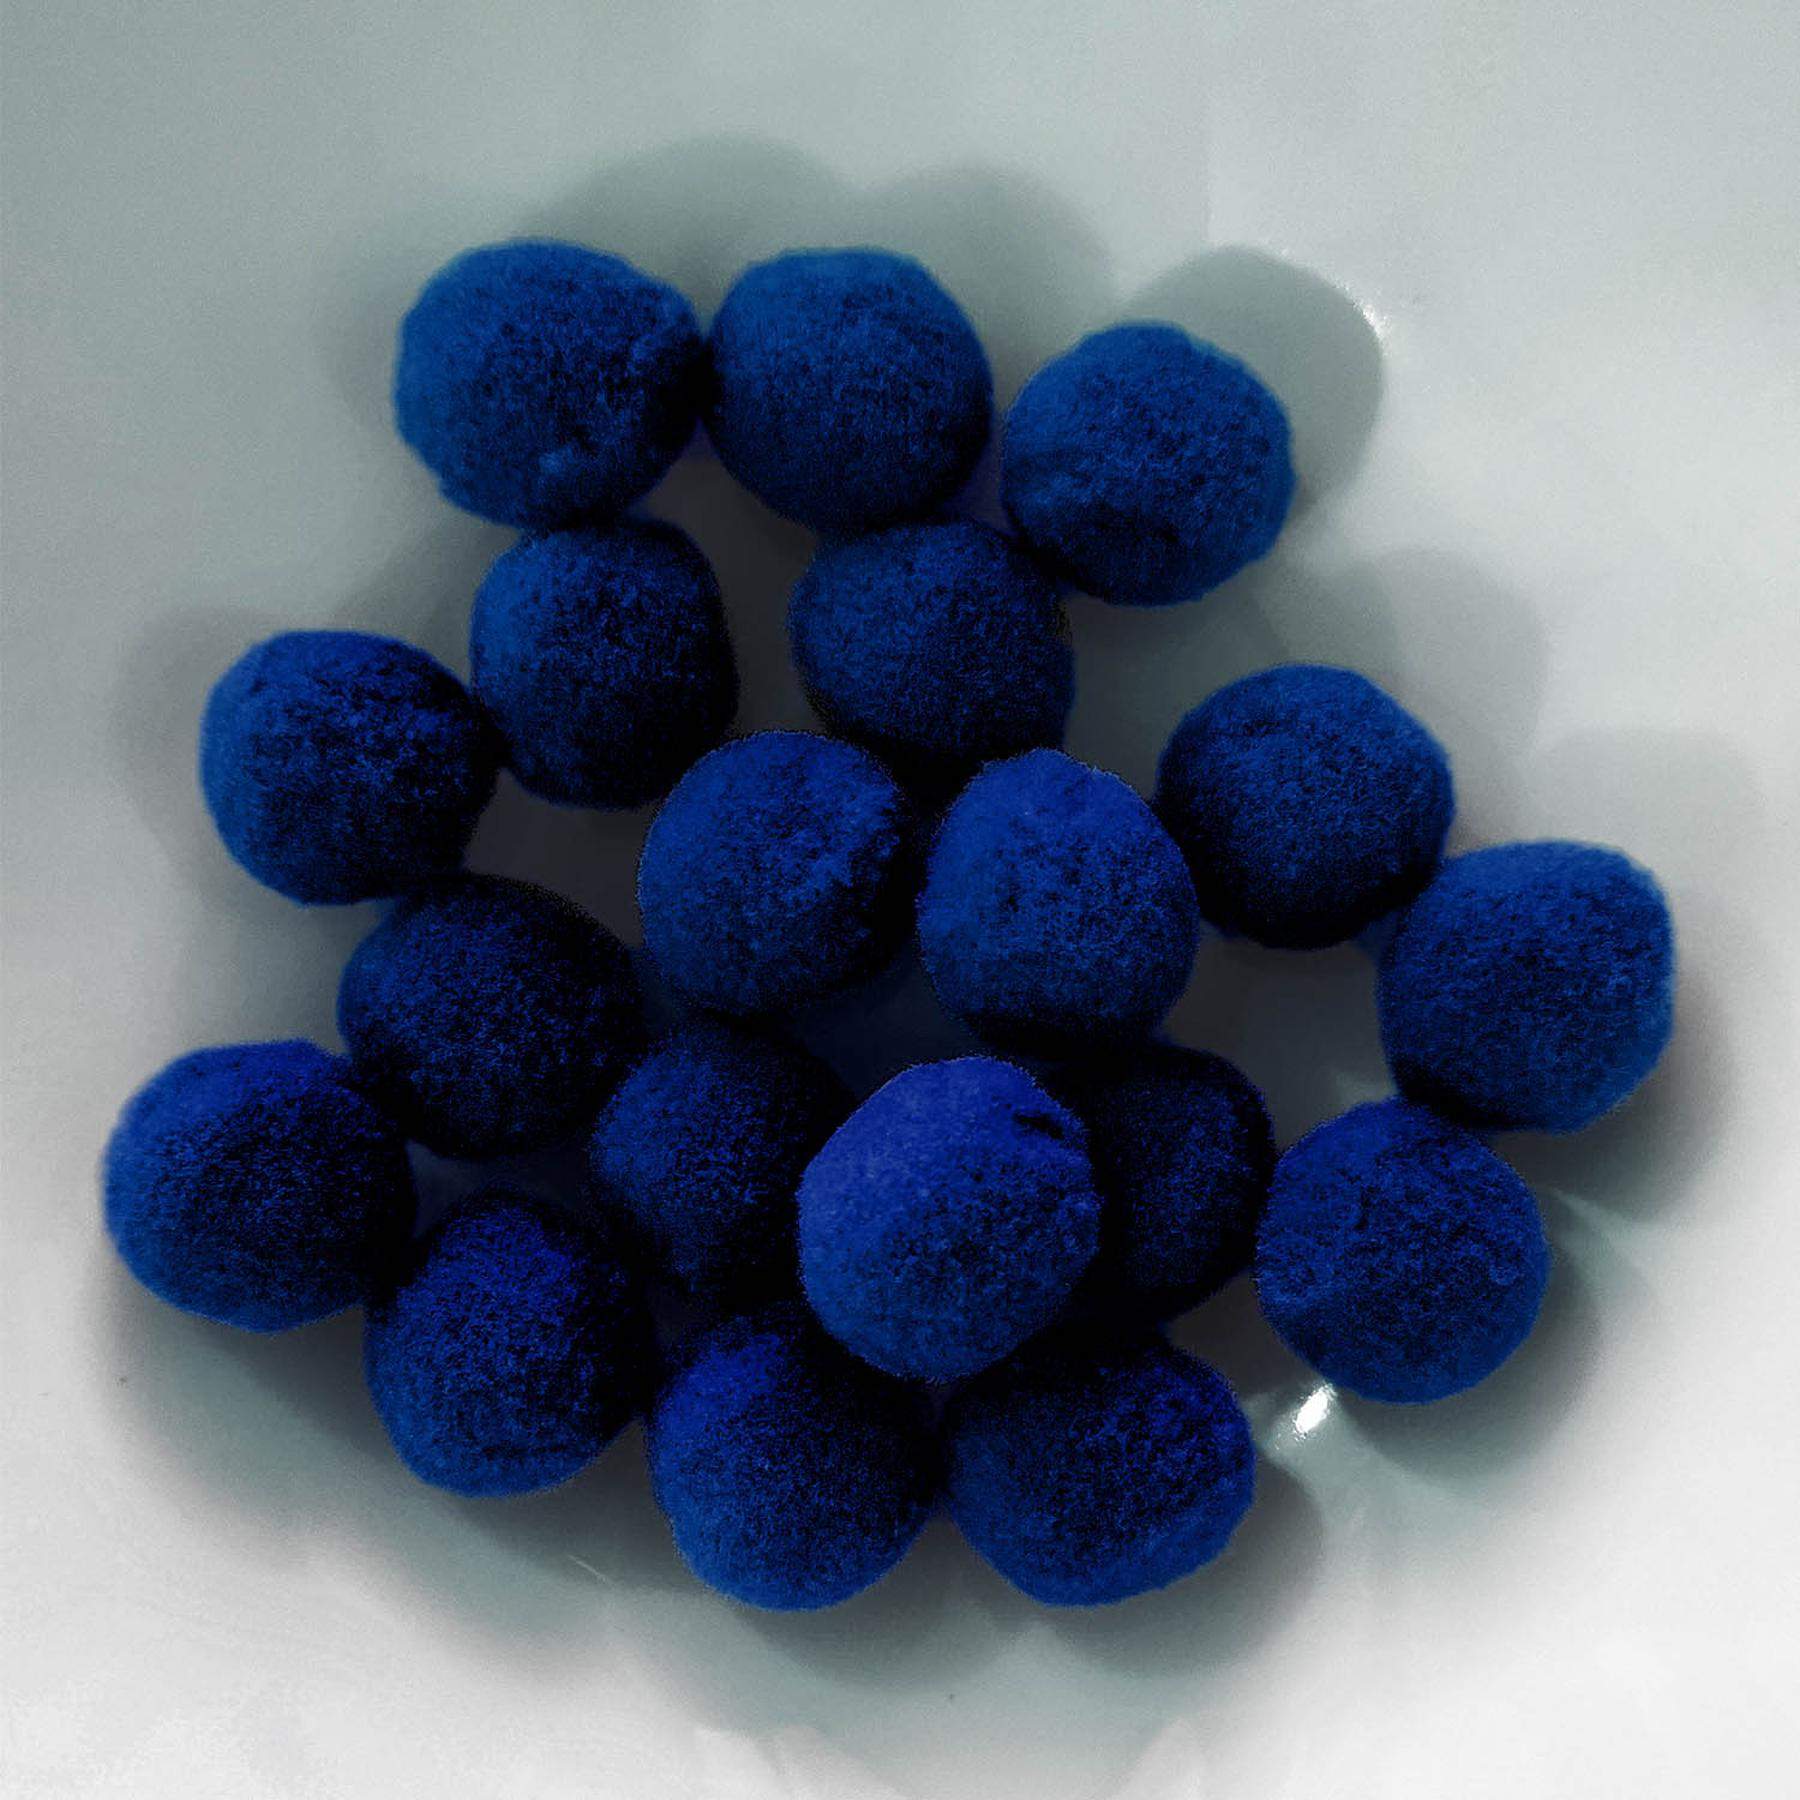 PomPon / Bälle aus Baumwolle - 10 mm / 50er Set - Blau dunkel / Königsblau